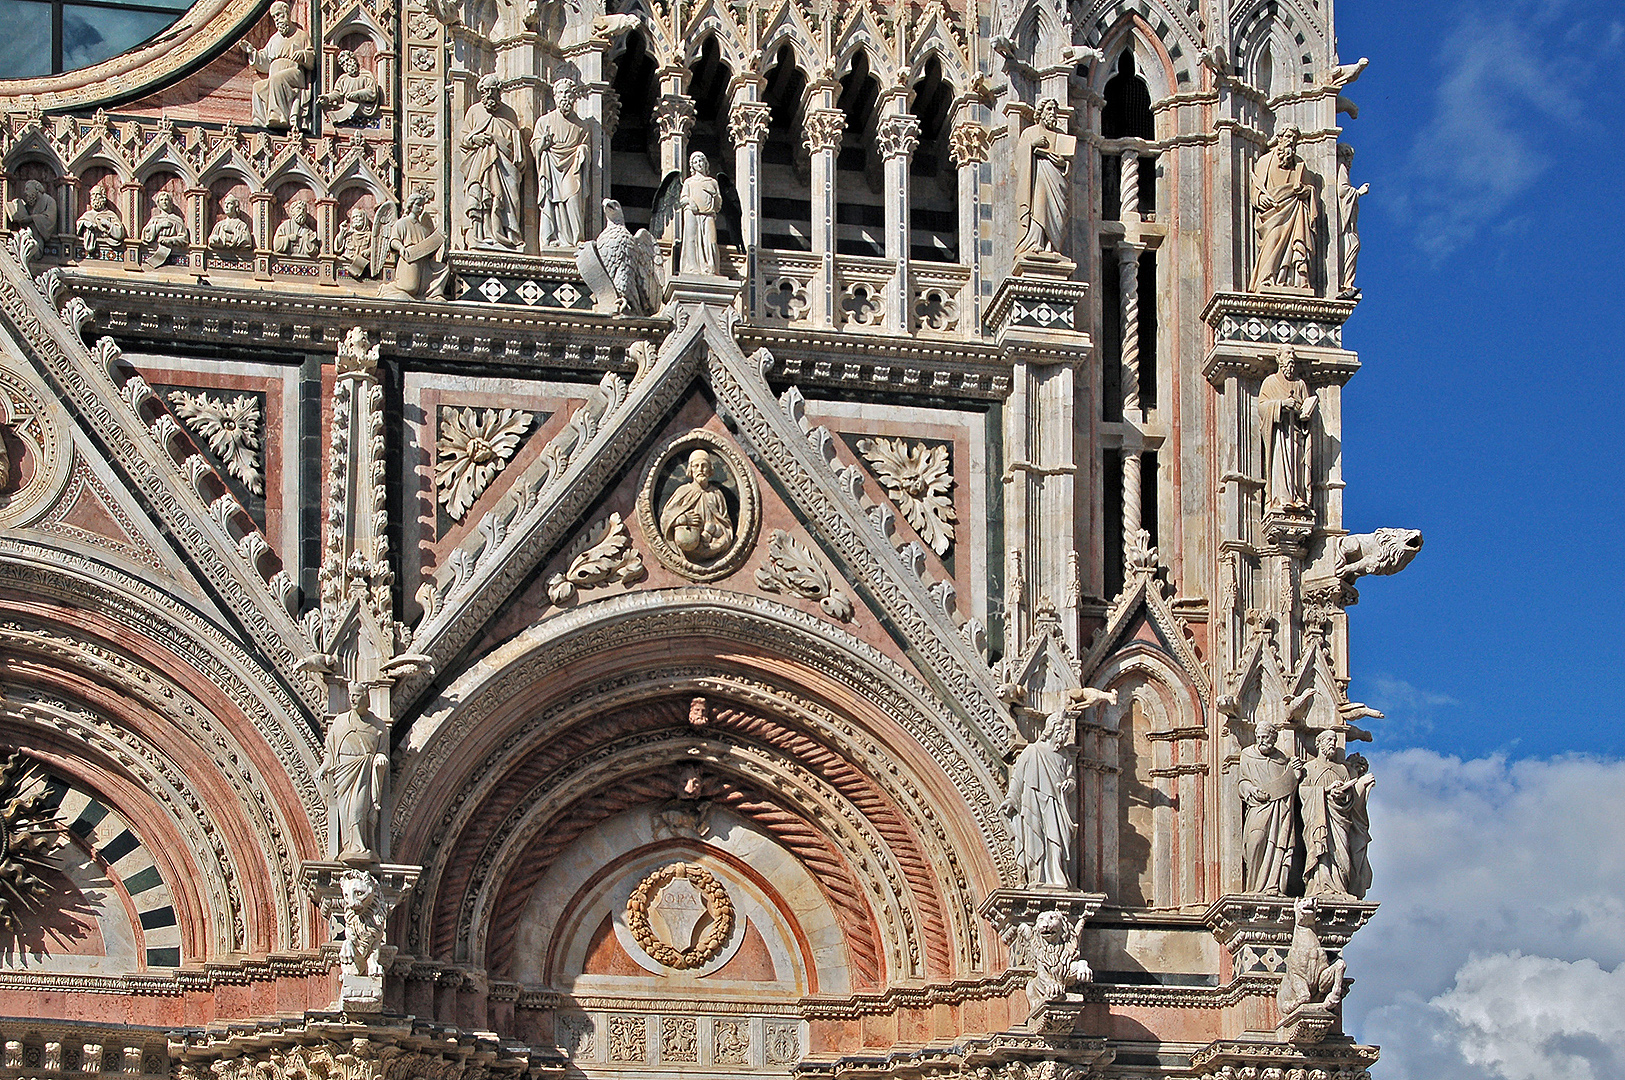 Dom van Siena, Toscane, Itali, Siena Cathedral, Tuscany, Italy